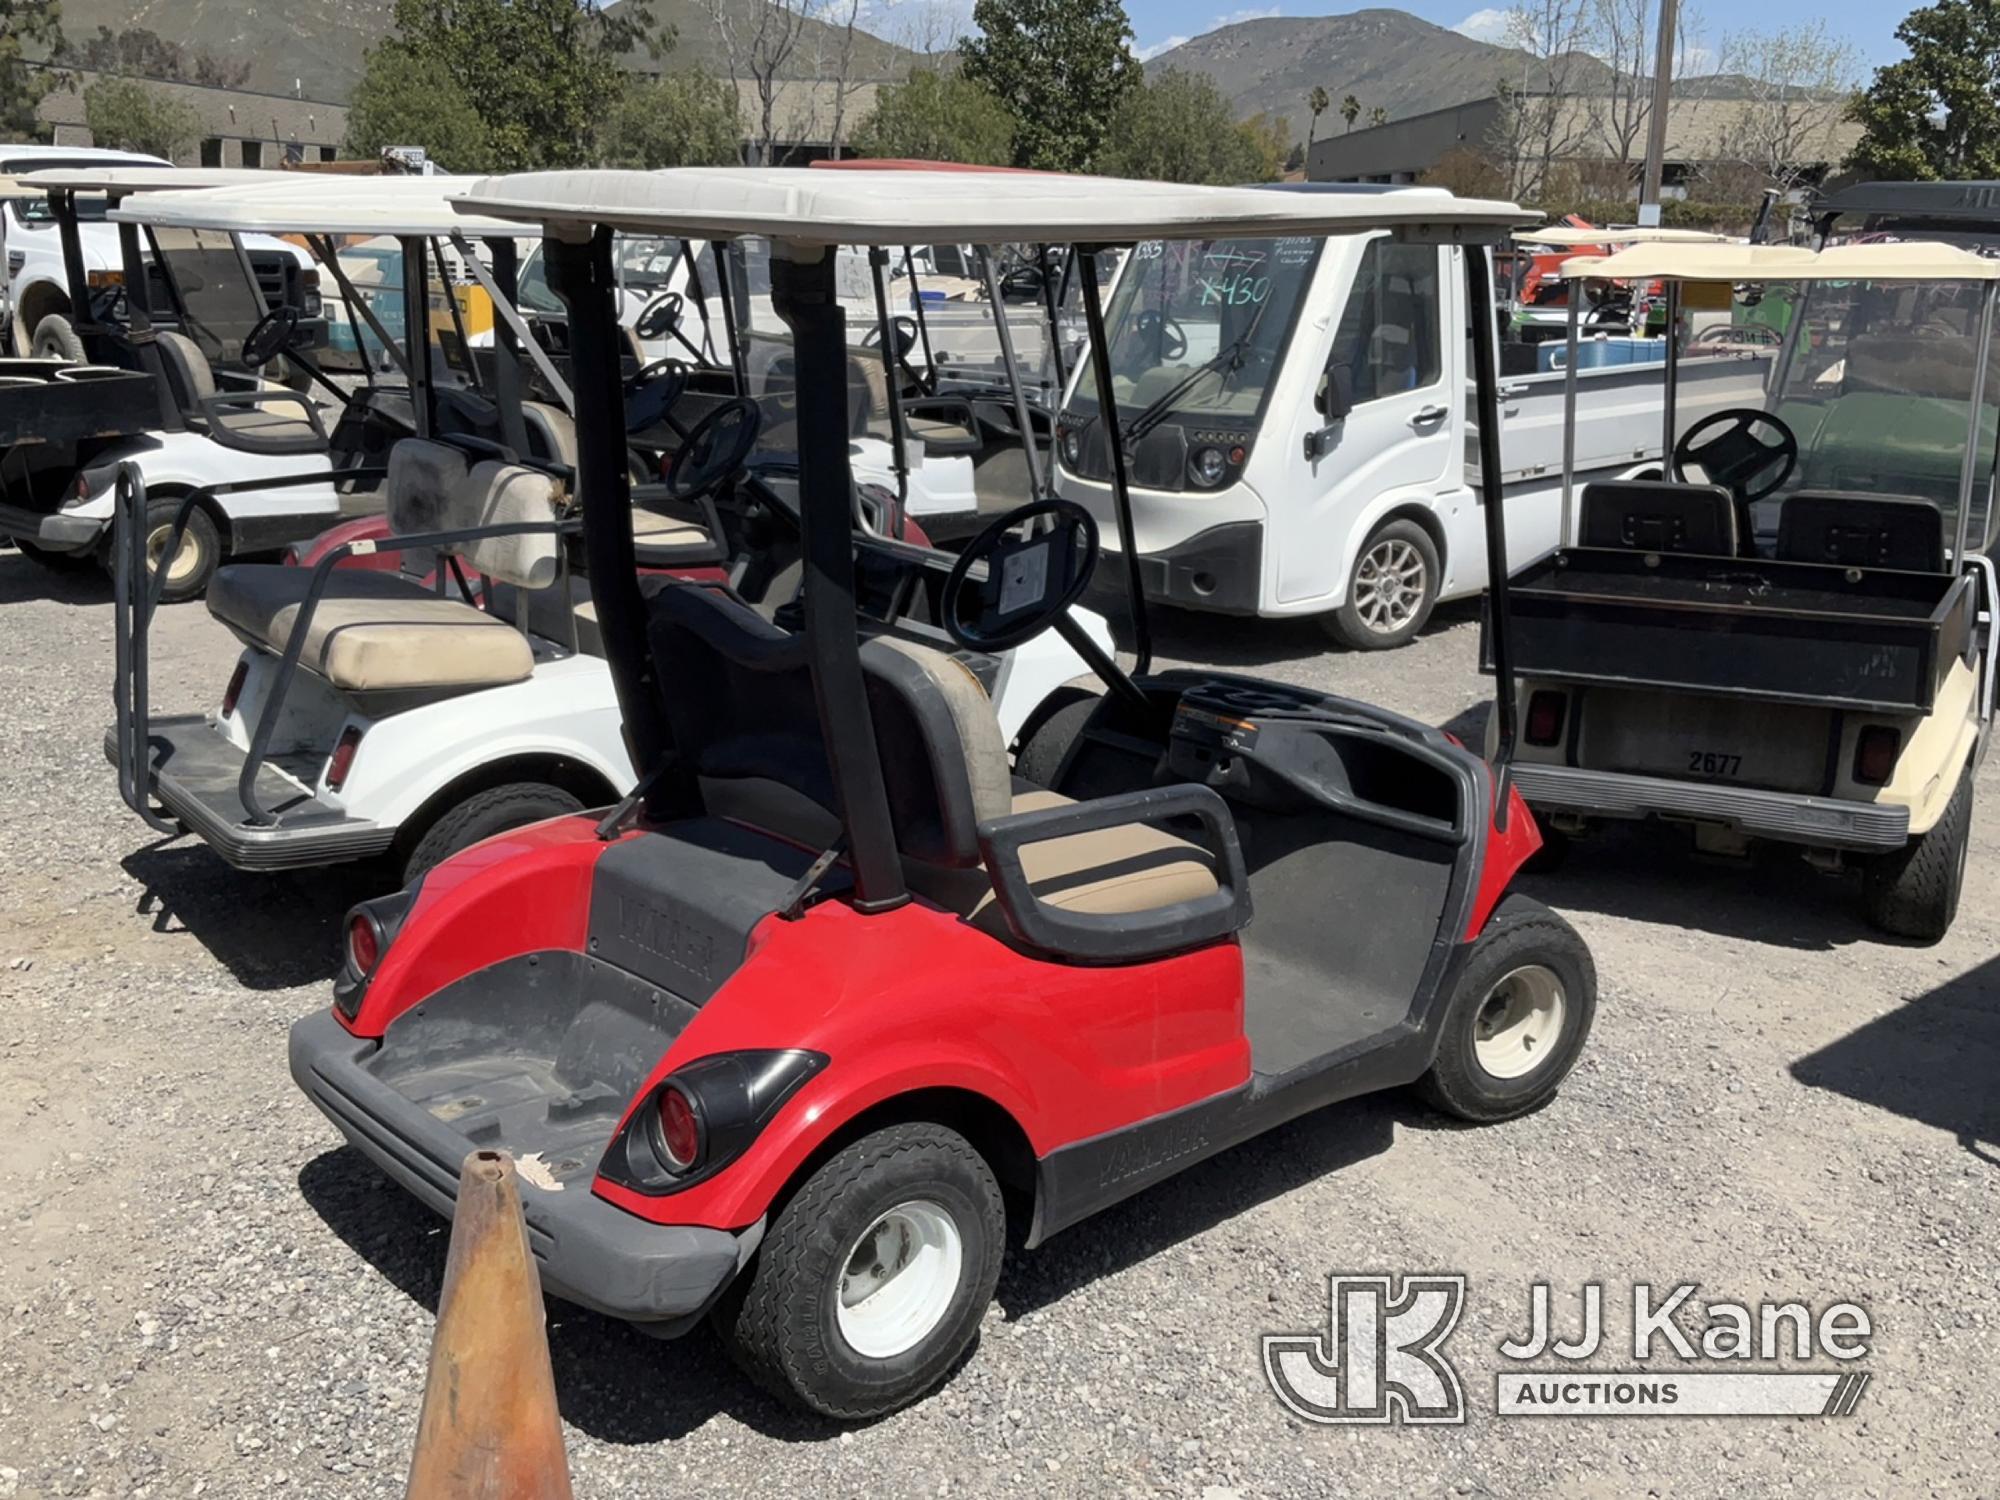 (Jurupa Valley, CA) 2011 Yamaha Golf Cart Not Running , No Key, Missing Parts